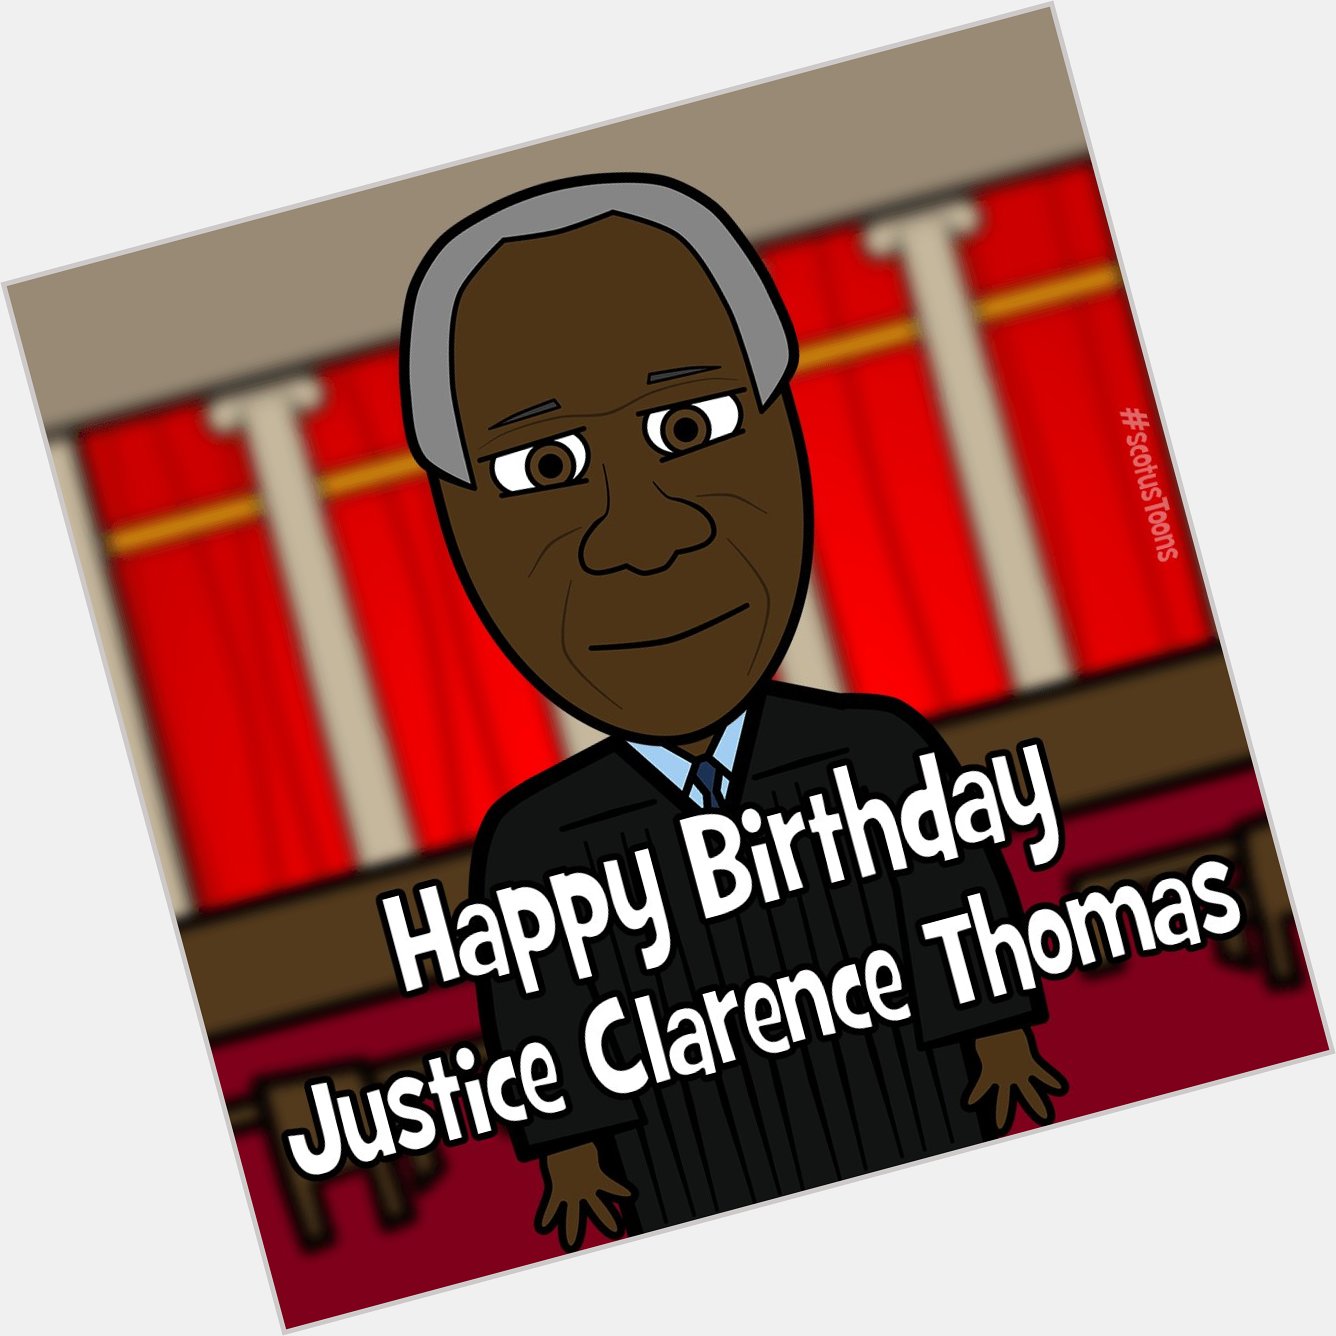 Happy Birthday Justice Clarence Thomas!    